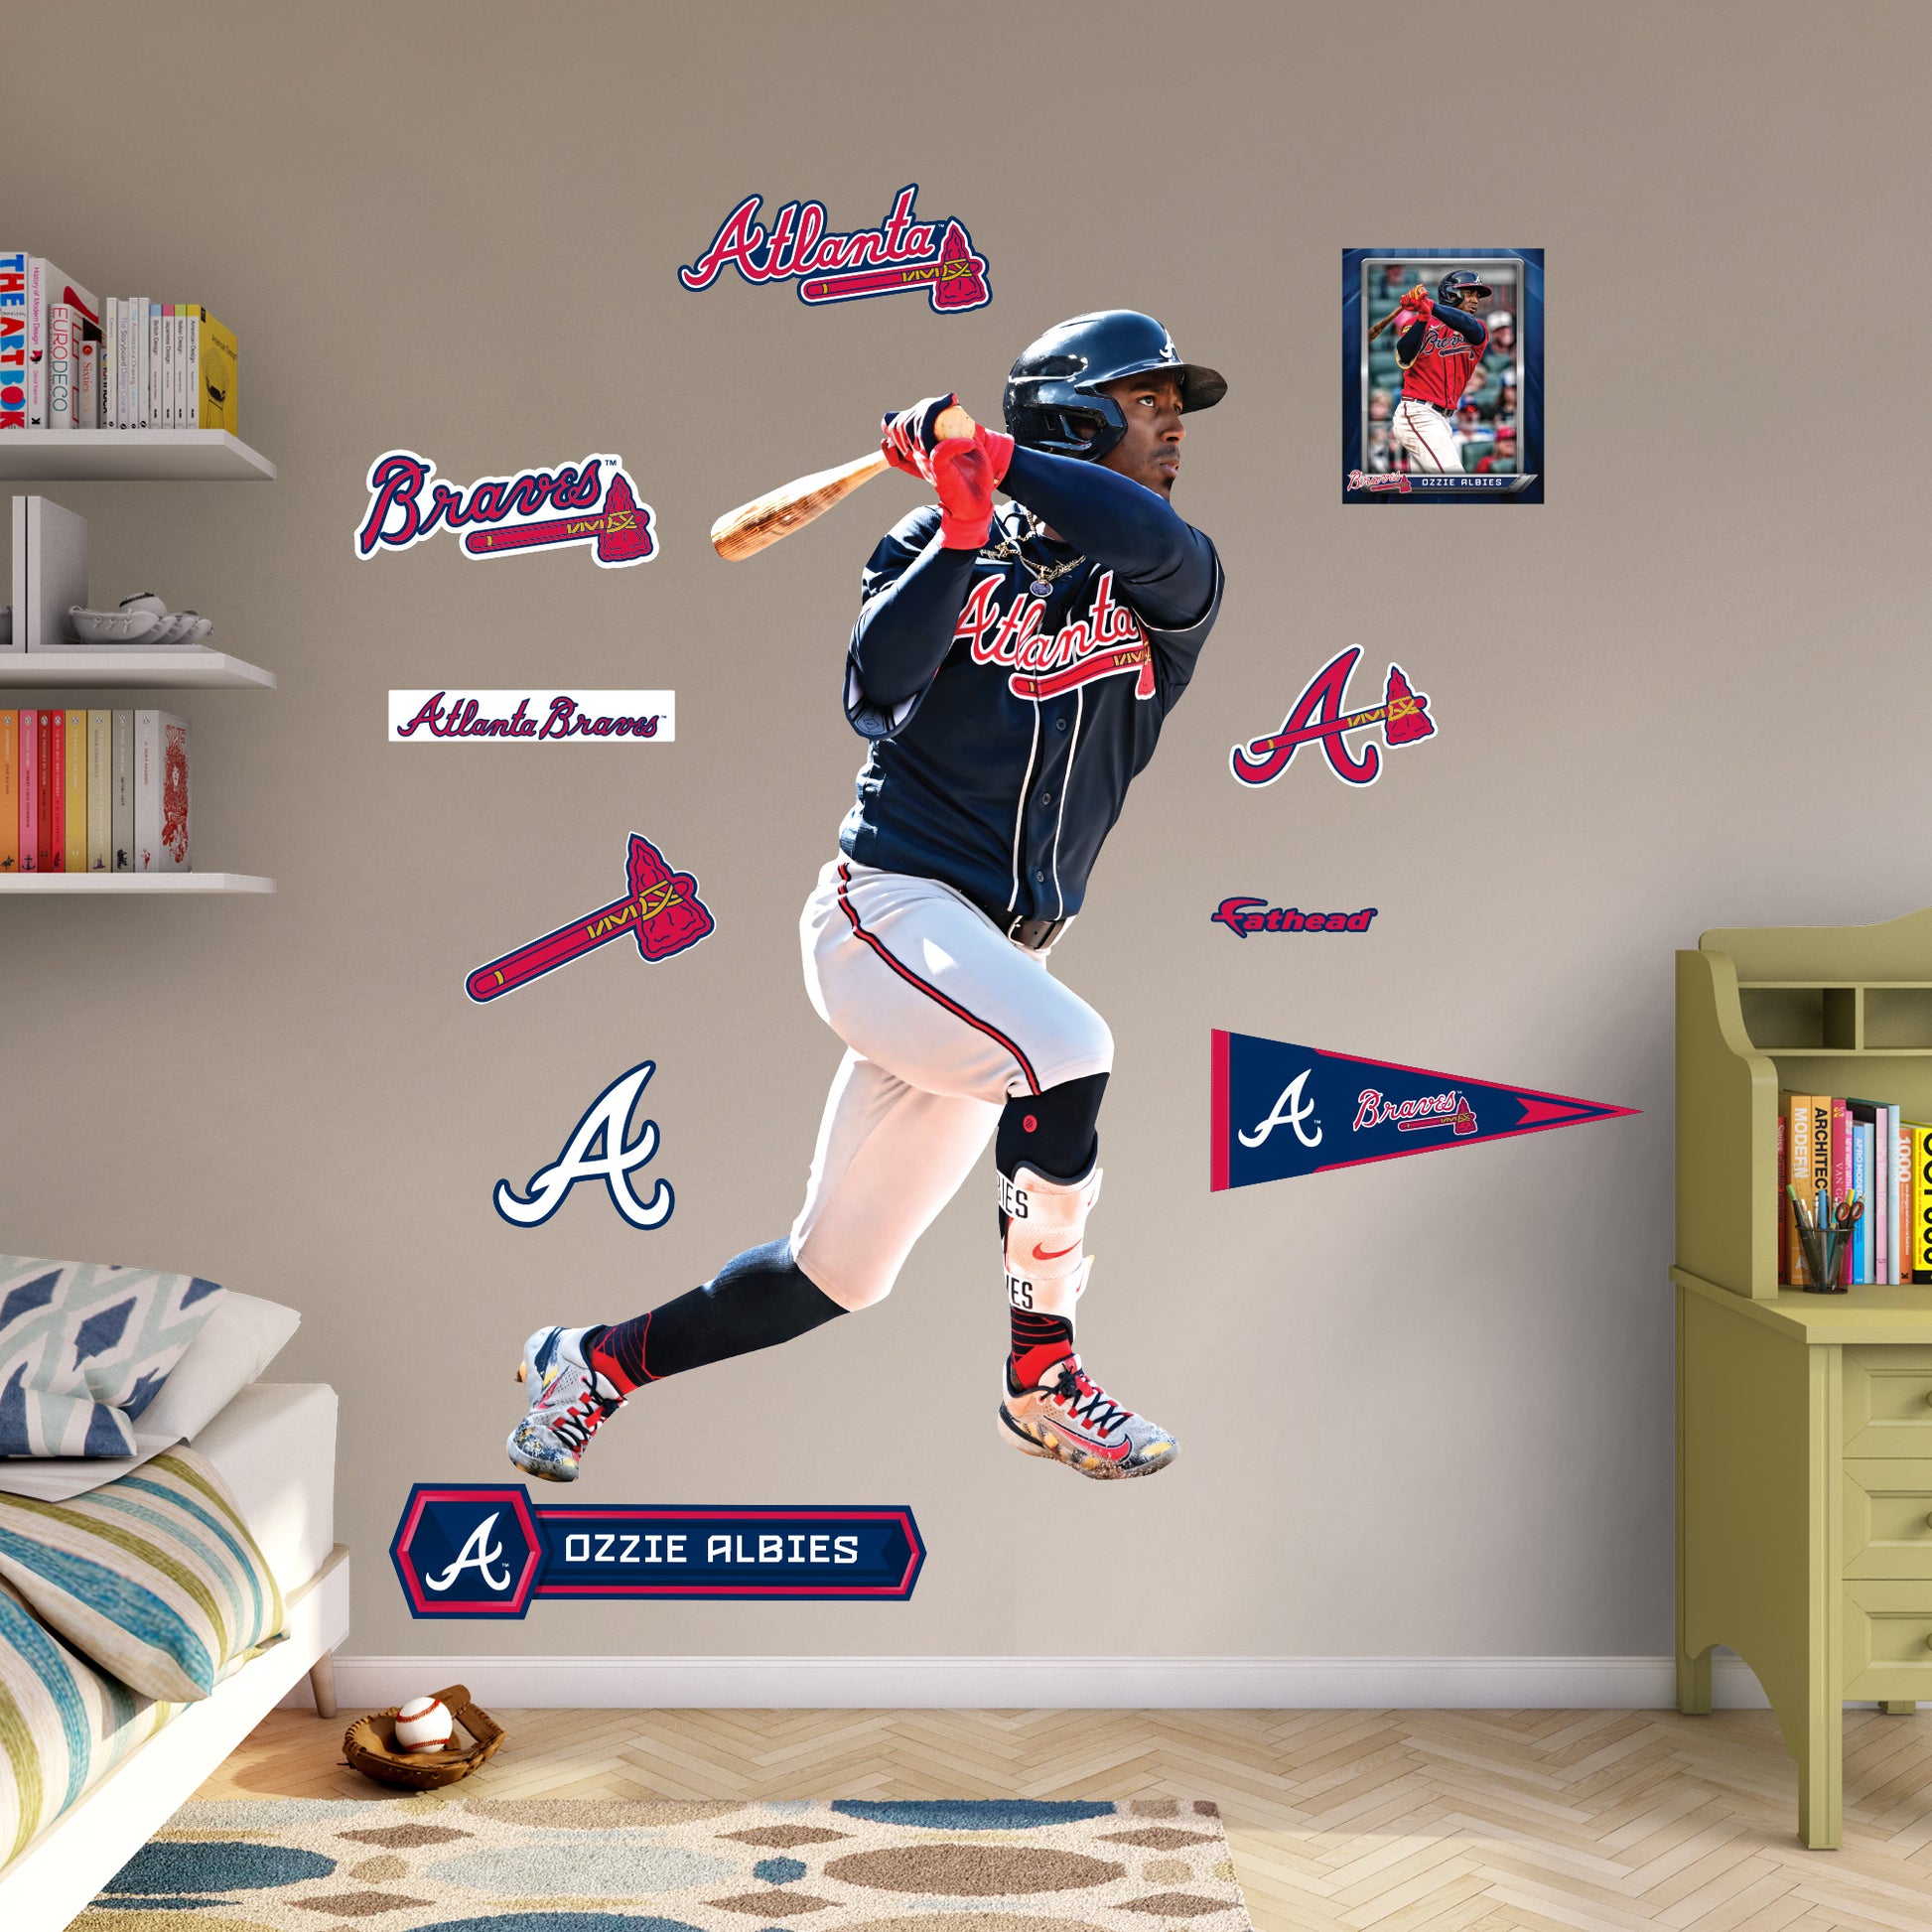 Atlanta Braves: Ozzie Albies 2022 Poster - Officially Licensed MLB Rem